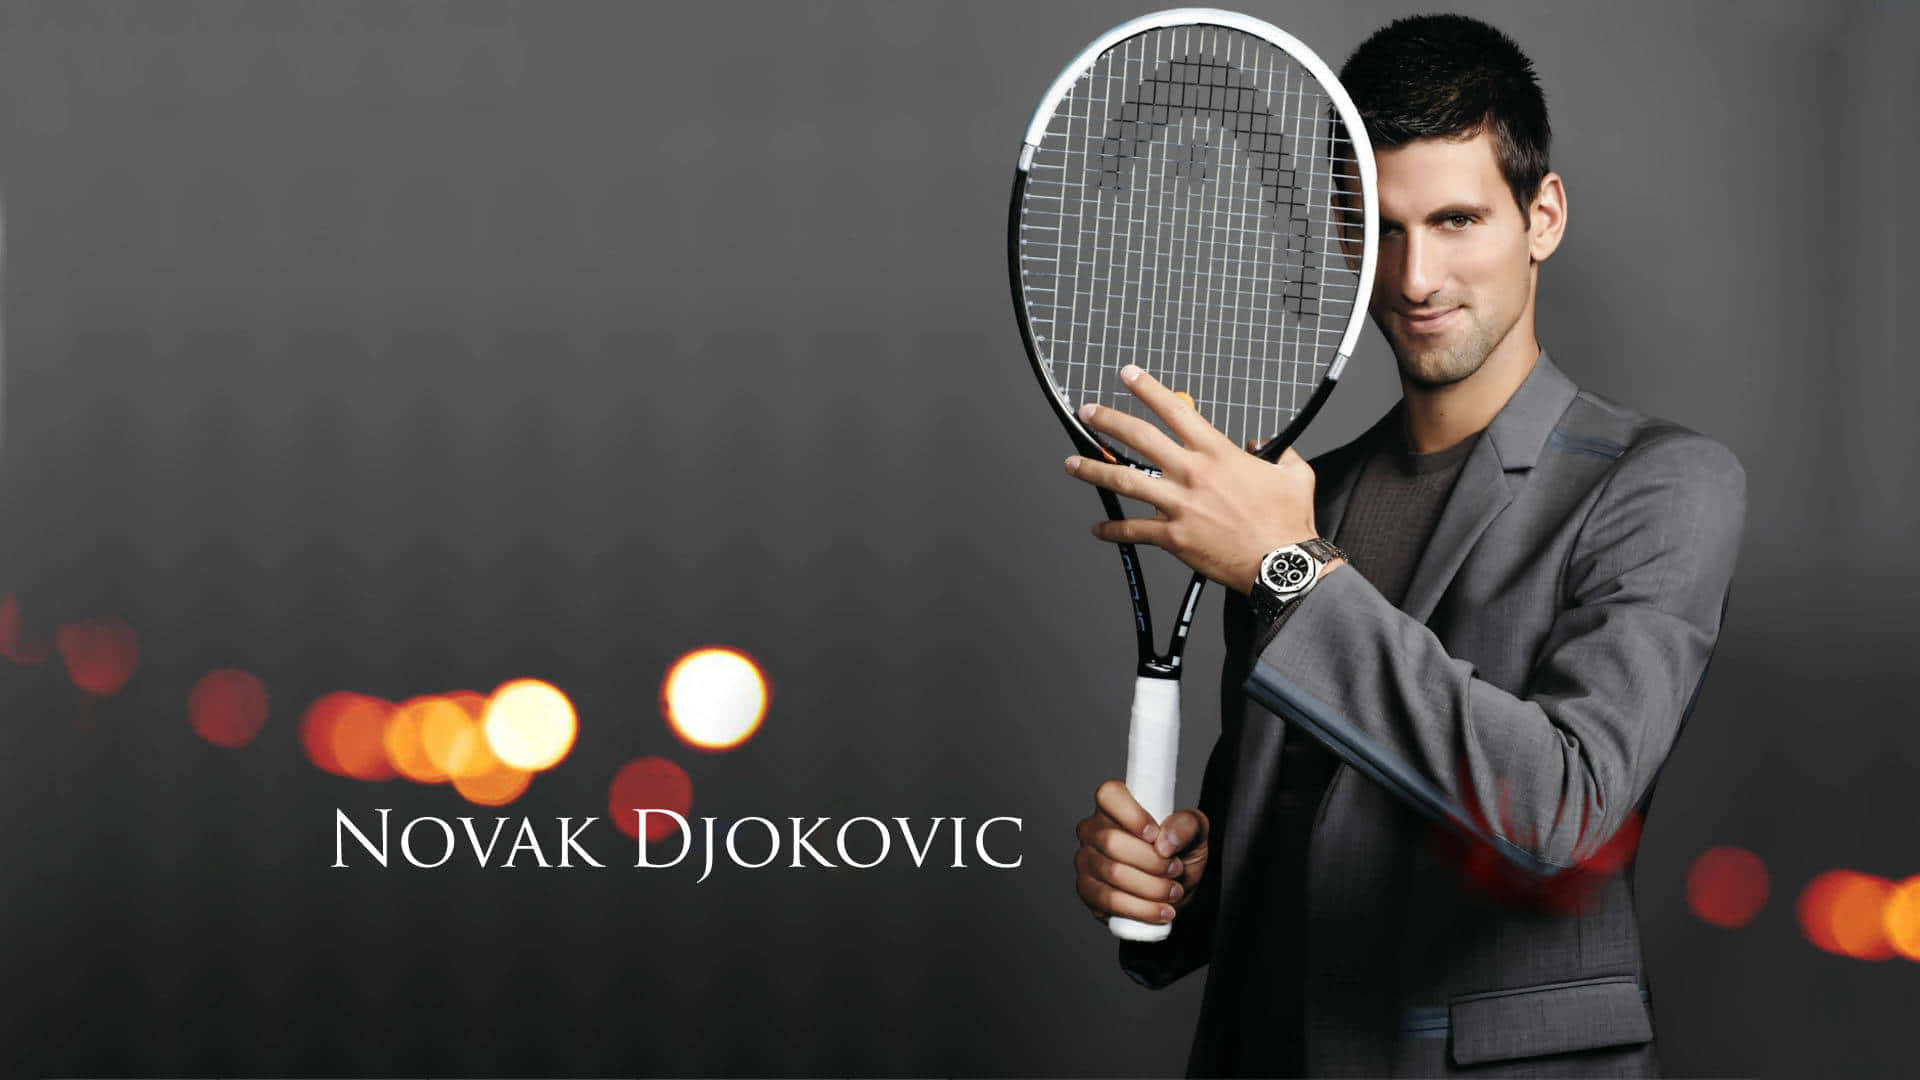 HD Serbisk Tennis Spiller Novak Djokovic Plakat Baggrund